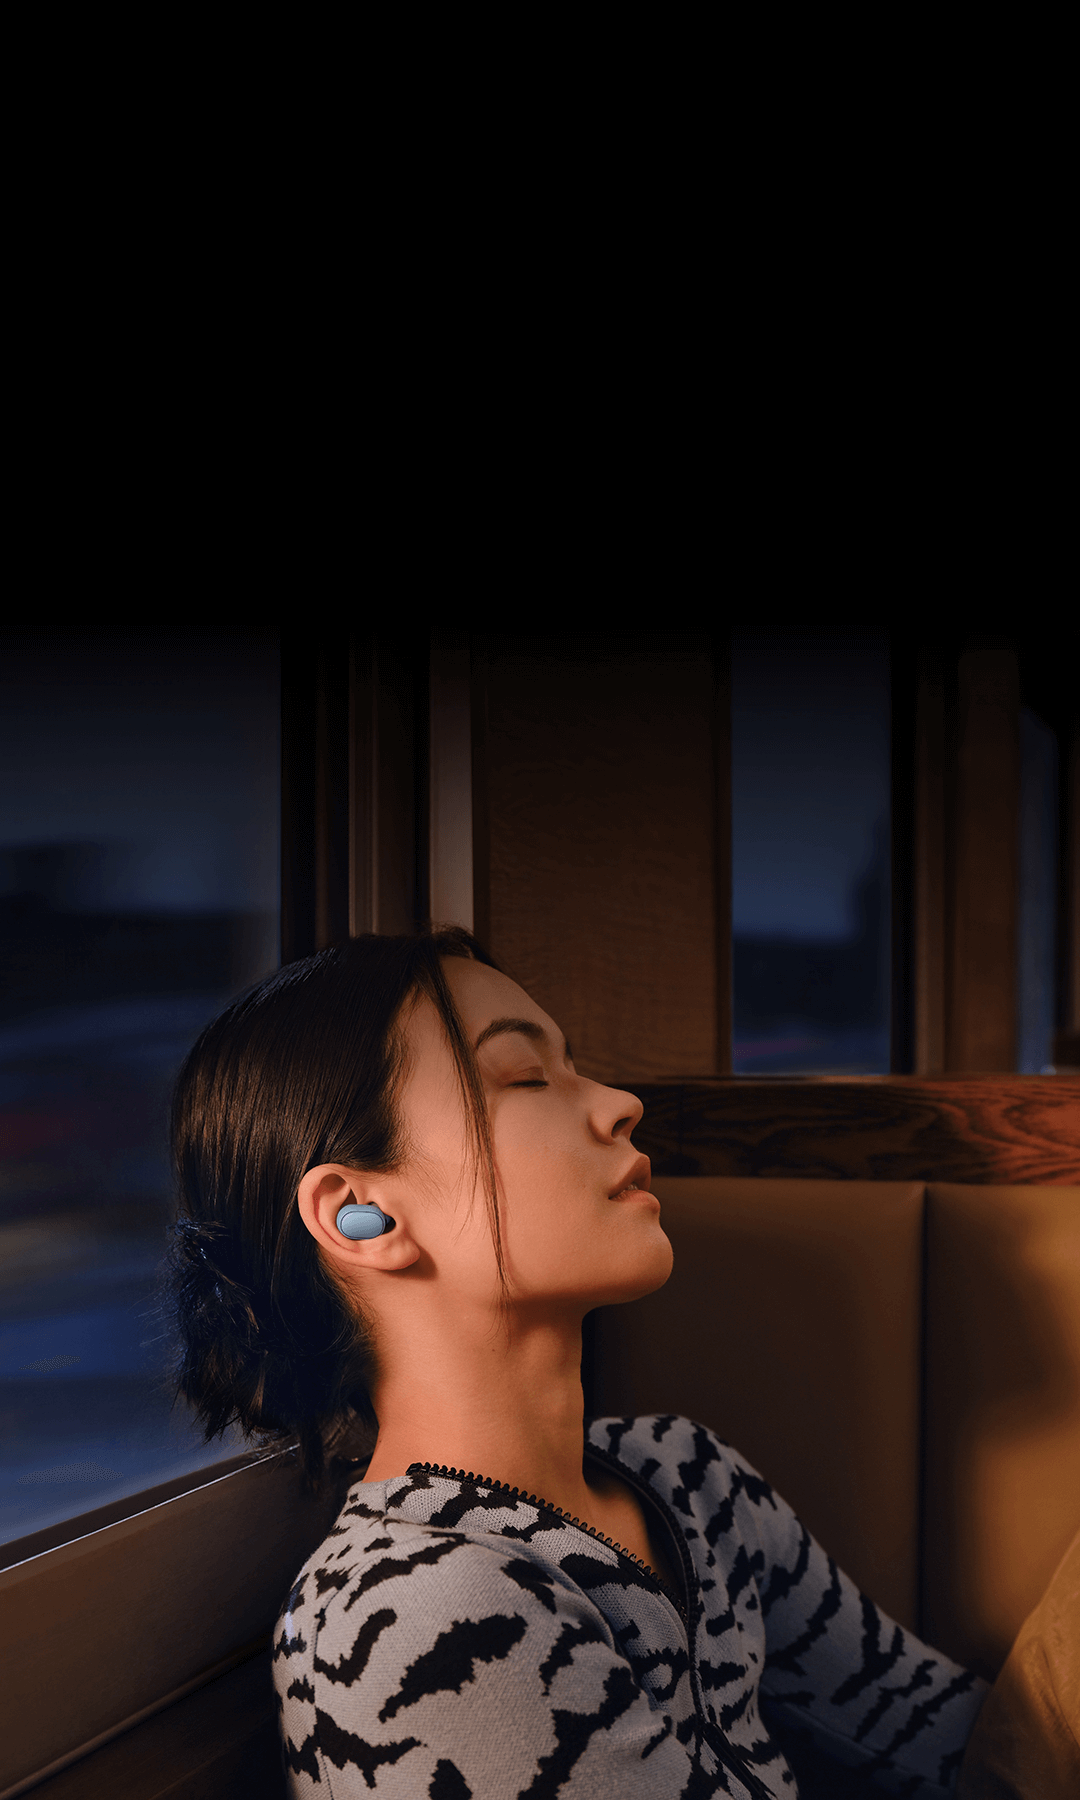 Auriculares Xiaomi Redmi Buds Essential - mi store